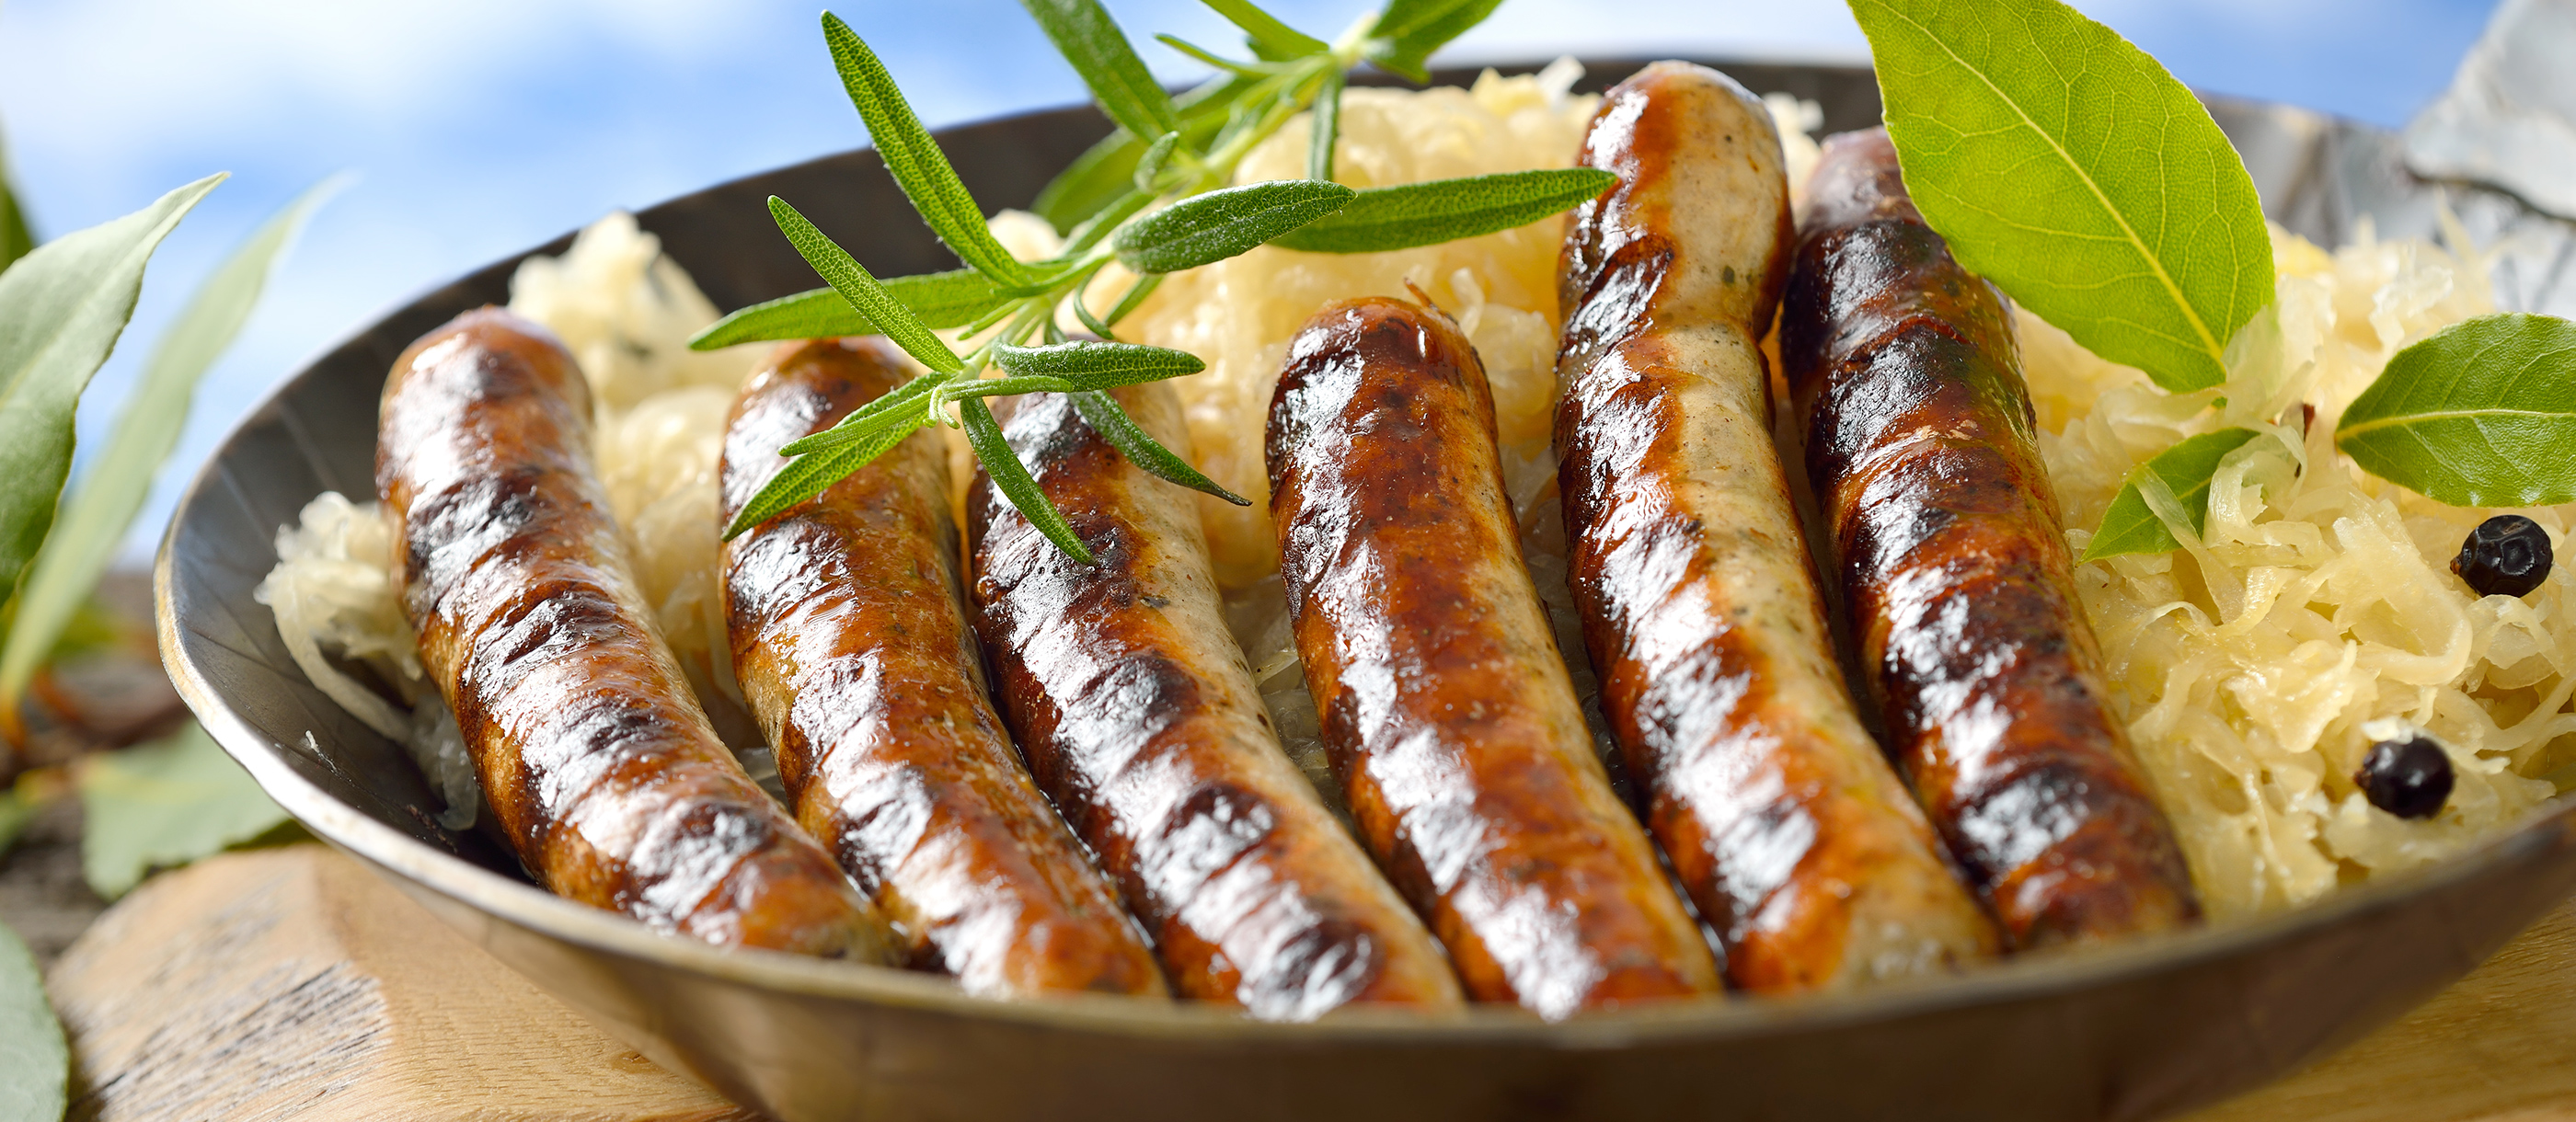 Swedish Sausage Dinner - Summer Vegetables With Sausage And Potatoes Skinnytaste / Swedish ...